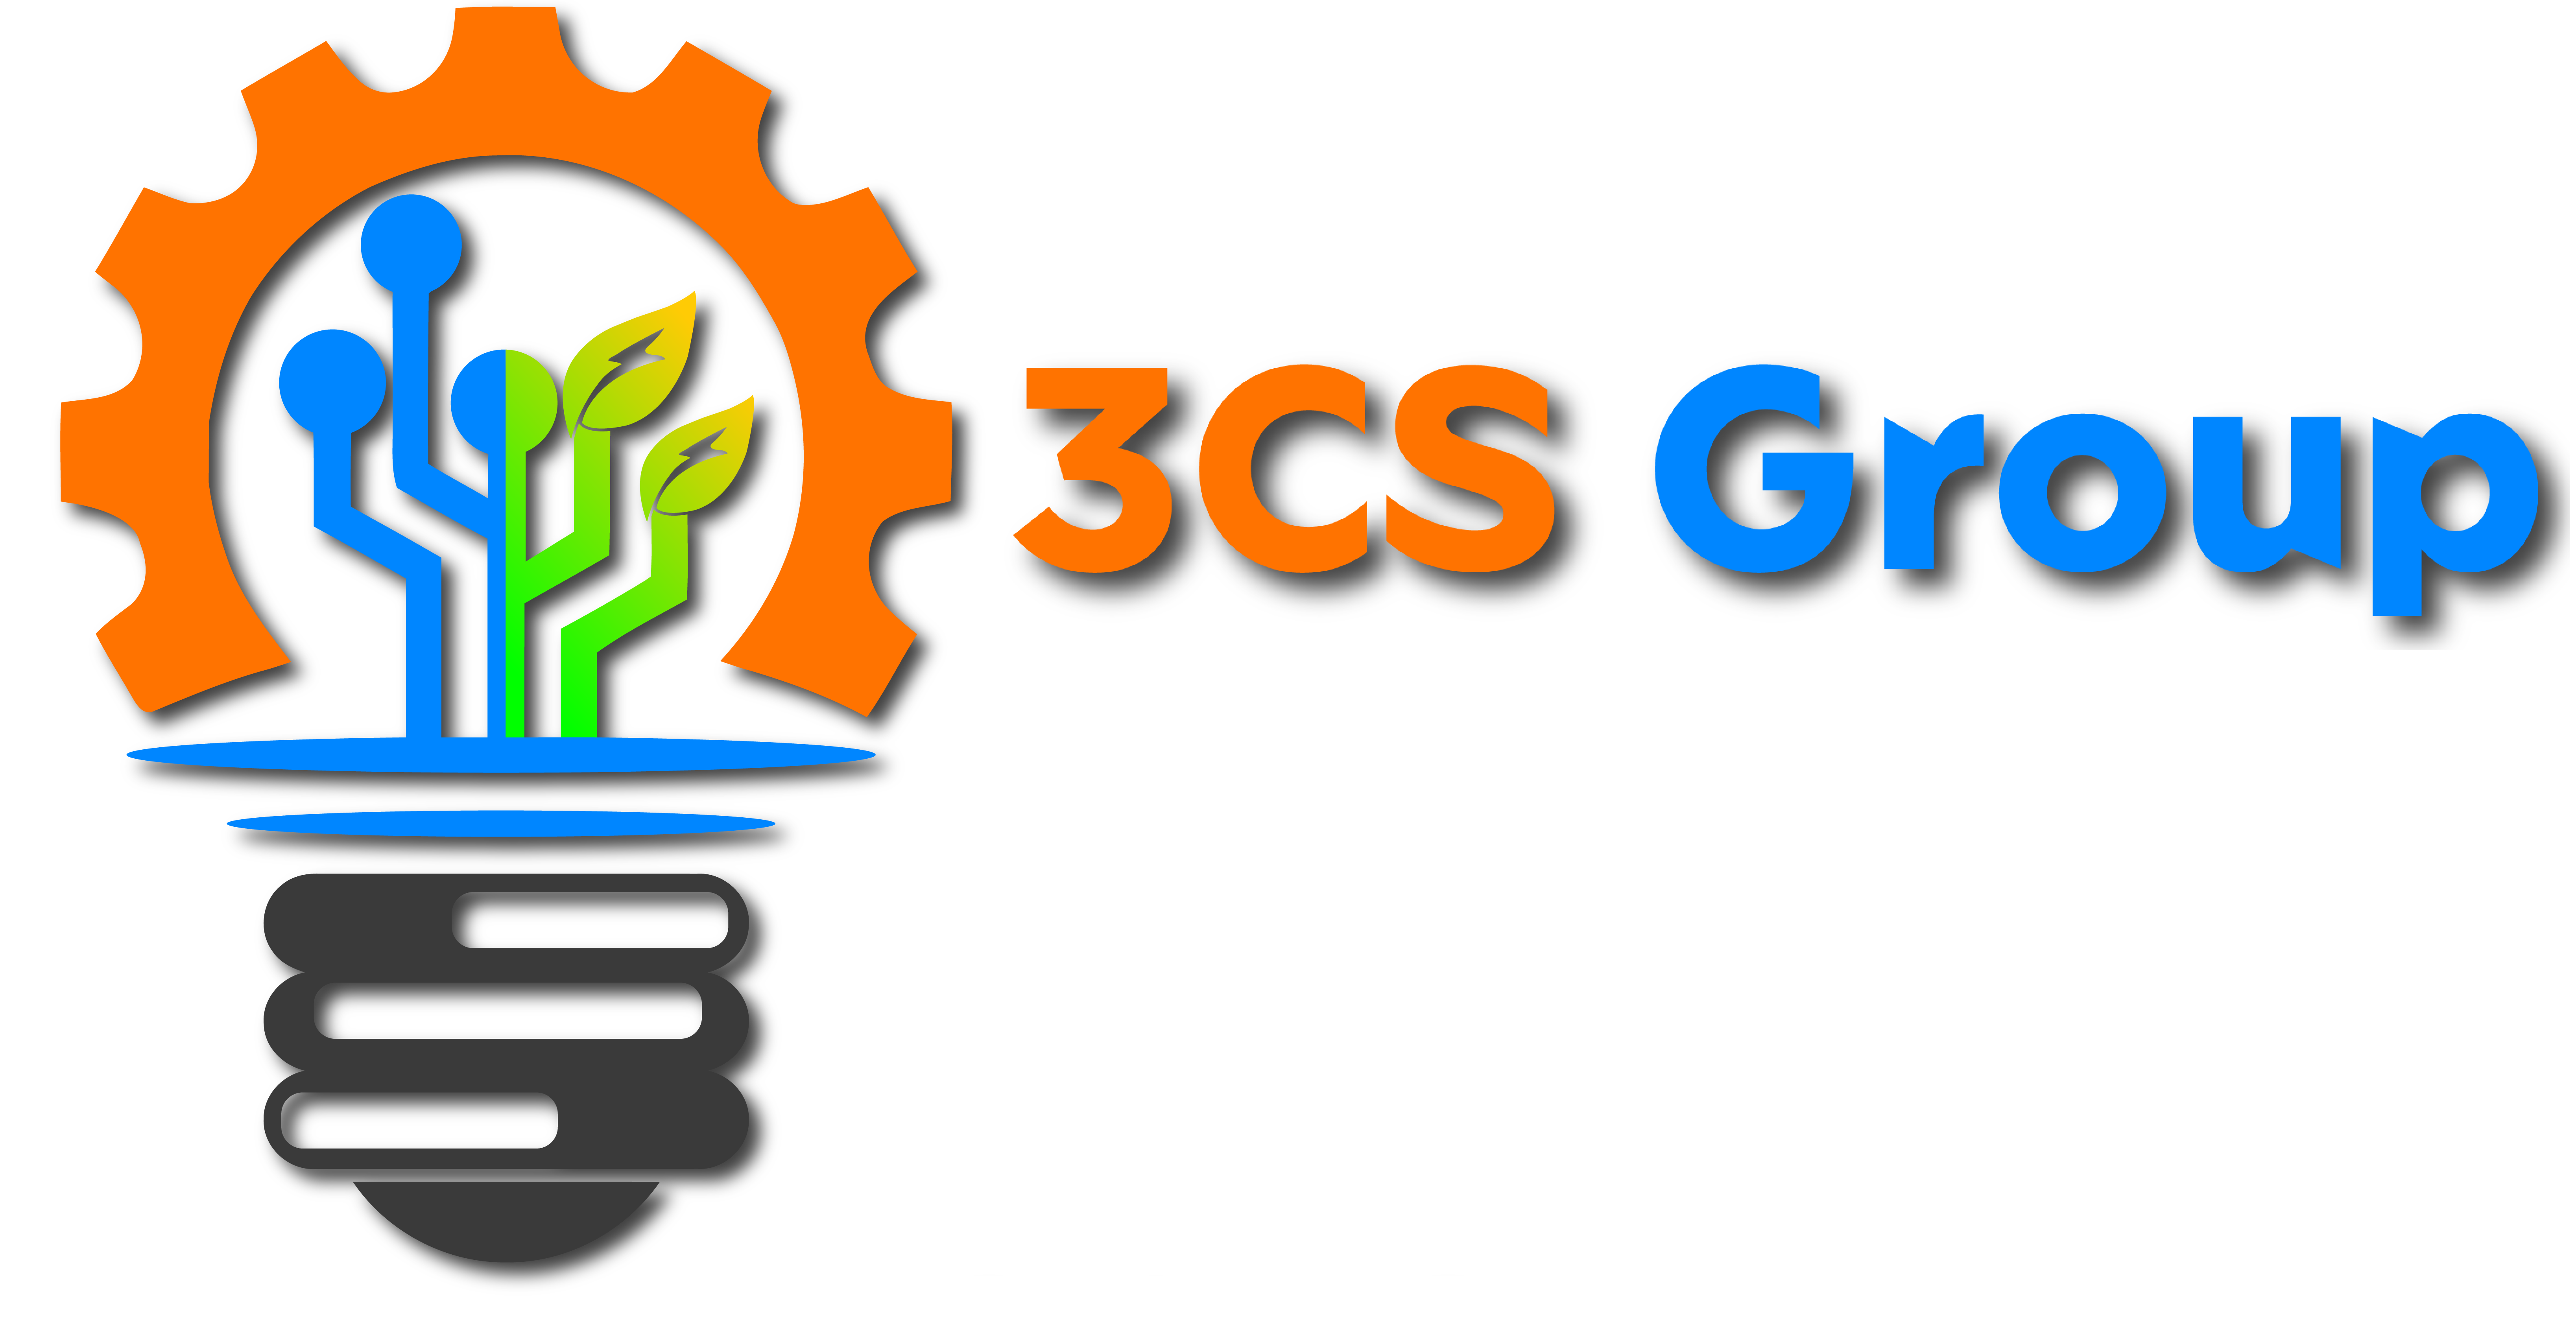 3CS Group